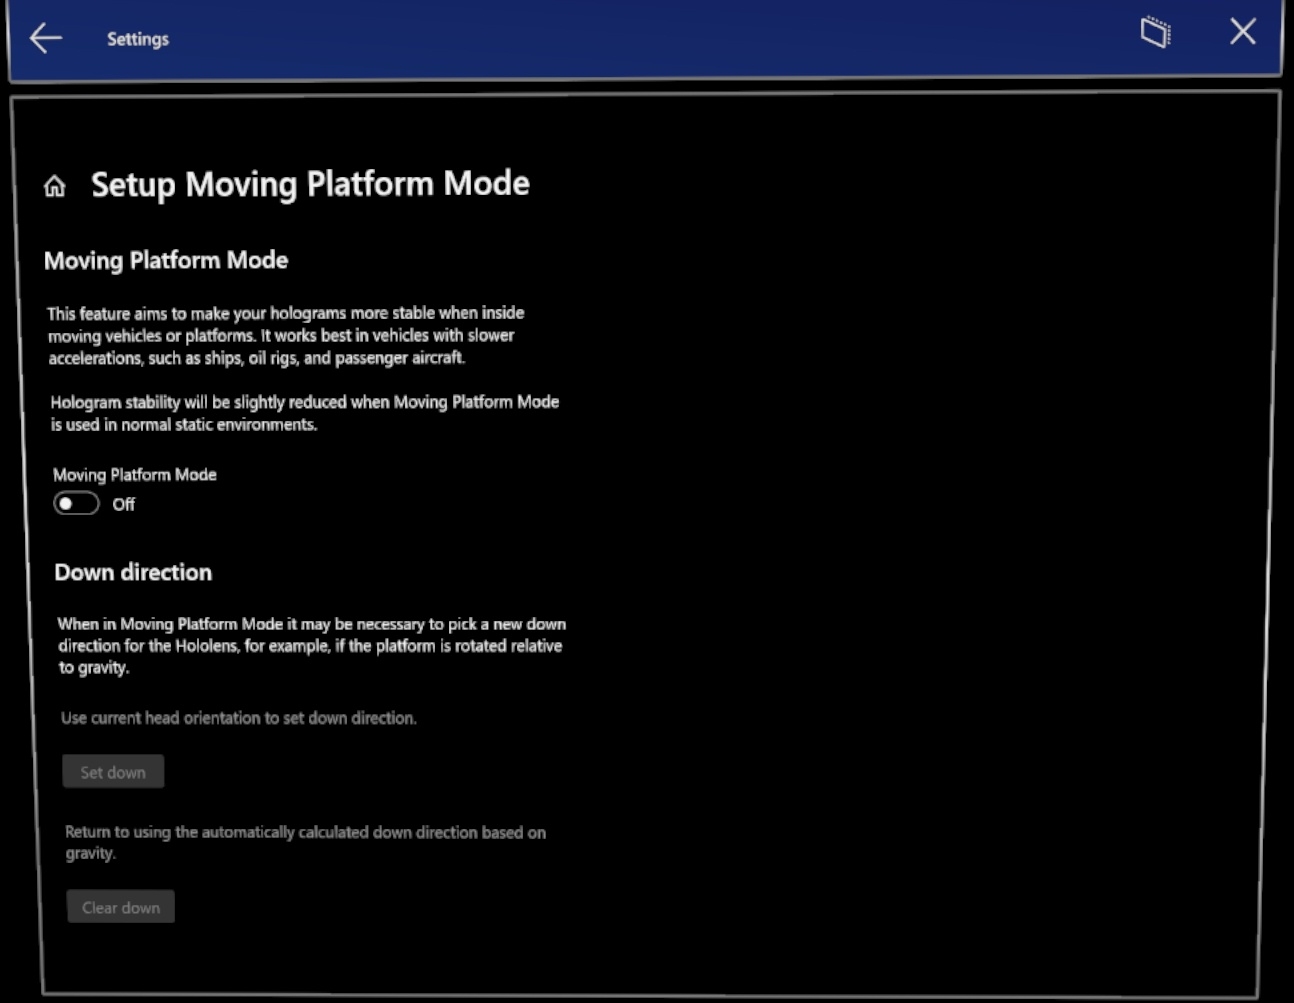 Moving Platform Mode page